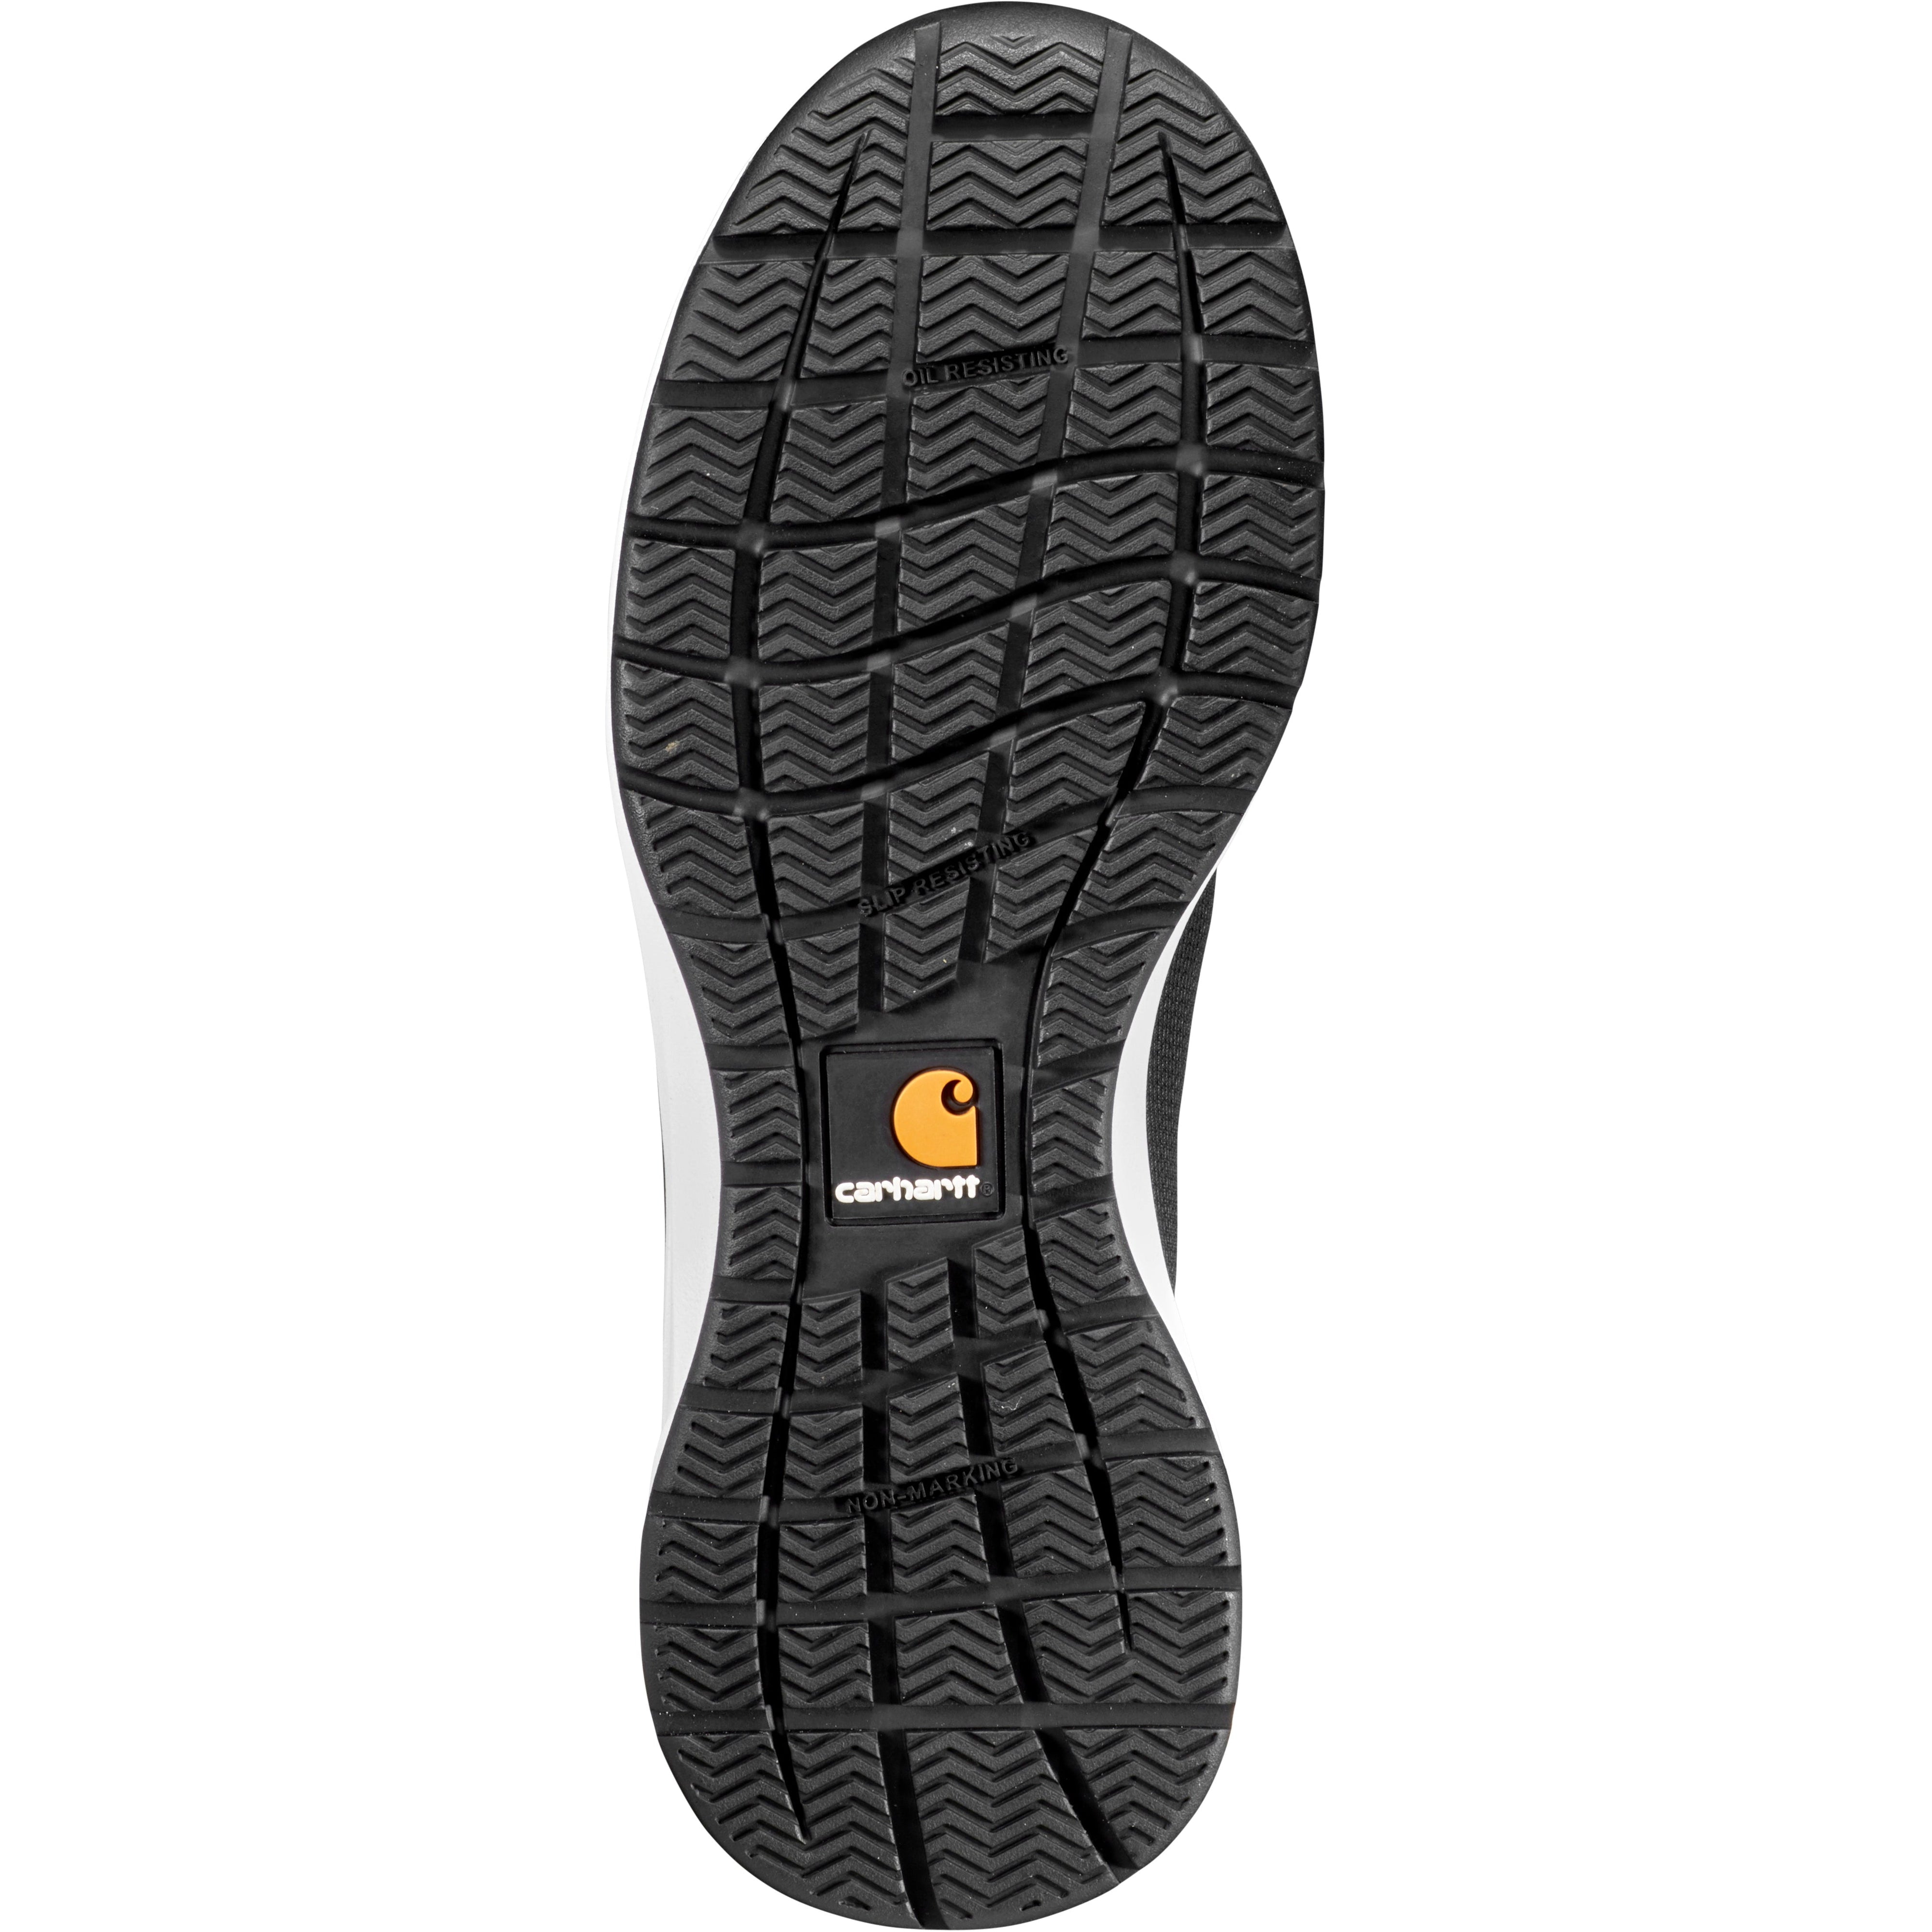 Carhartt Women's Force Nano Composite Toe Work Shoe - Black- FA3481-W  - Overlook Boots